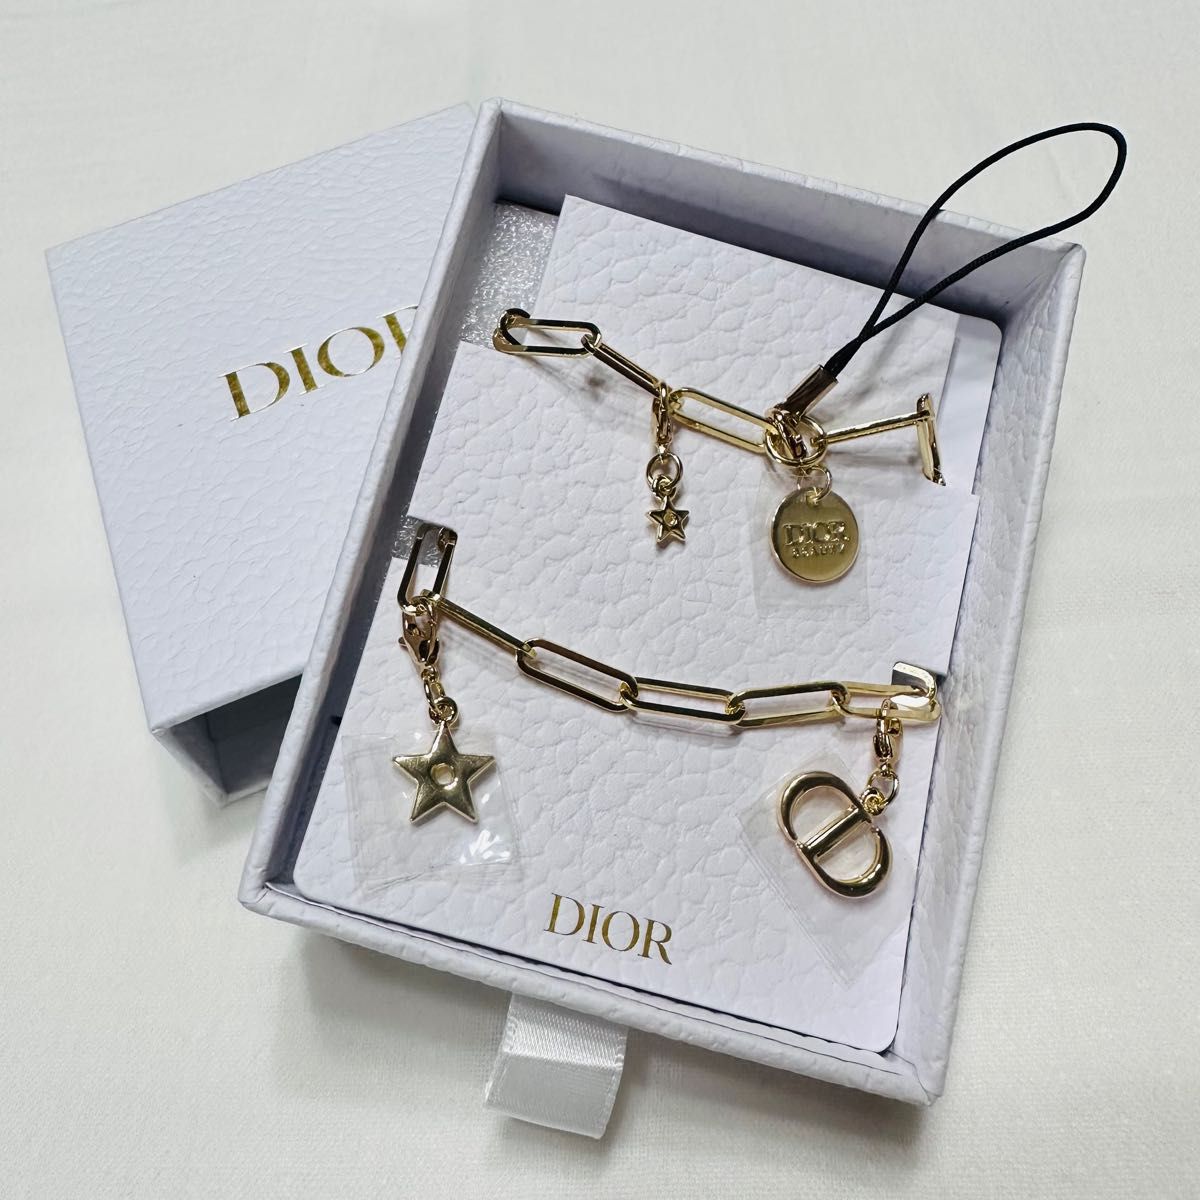 Dior チャーム ストラップ - ストラップ